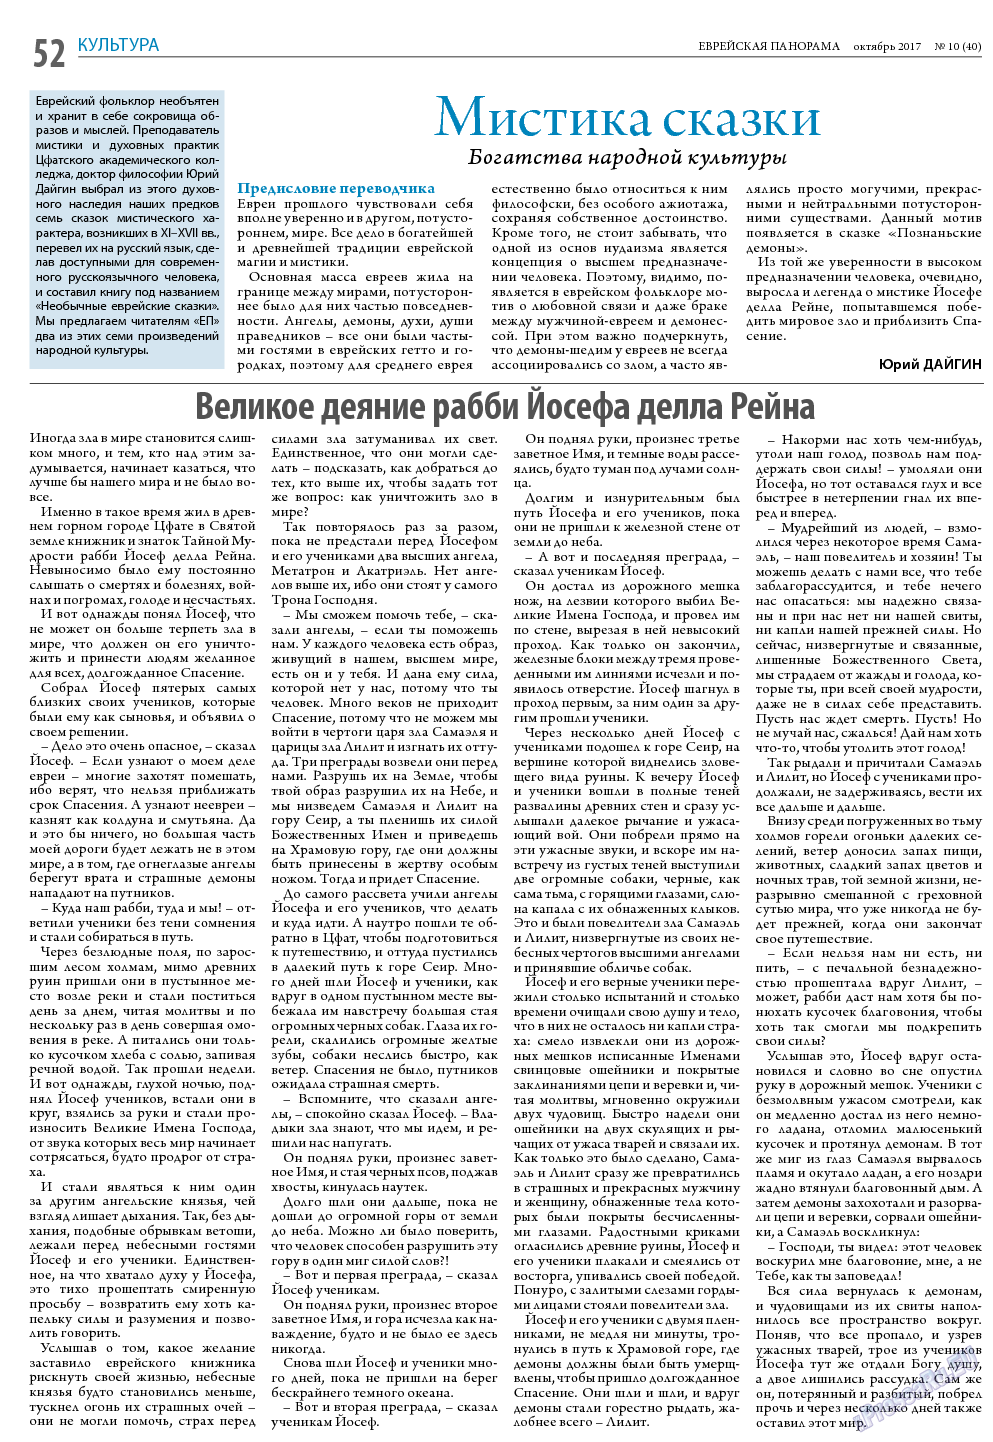 Еврейская панорама, газета. 2017 №10 стр.52